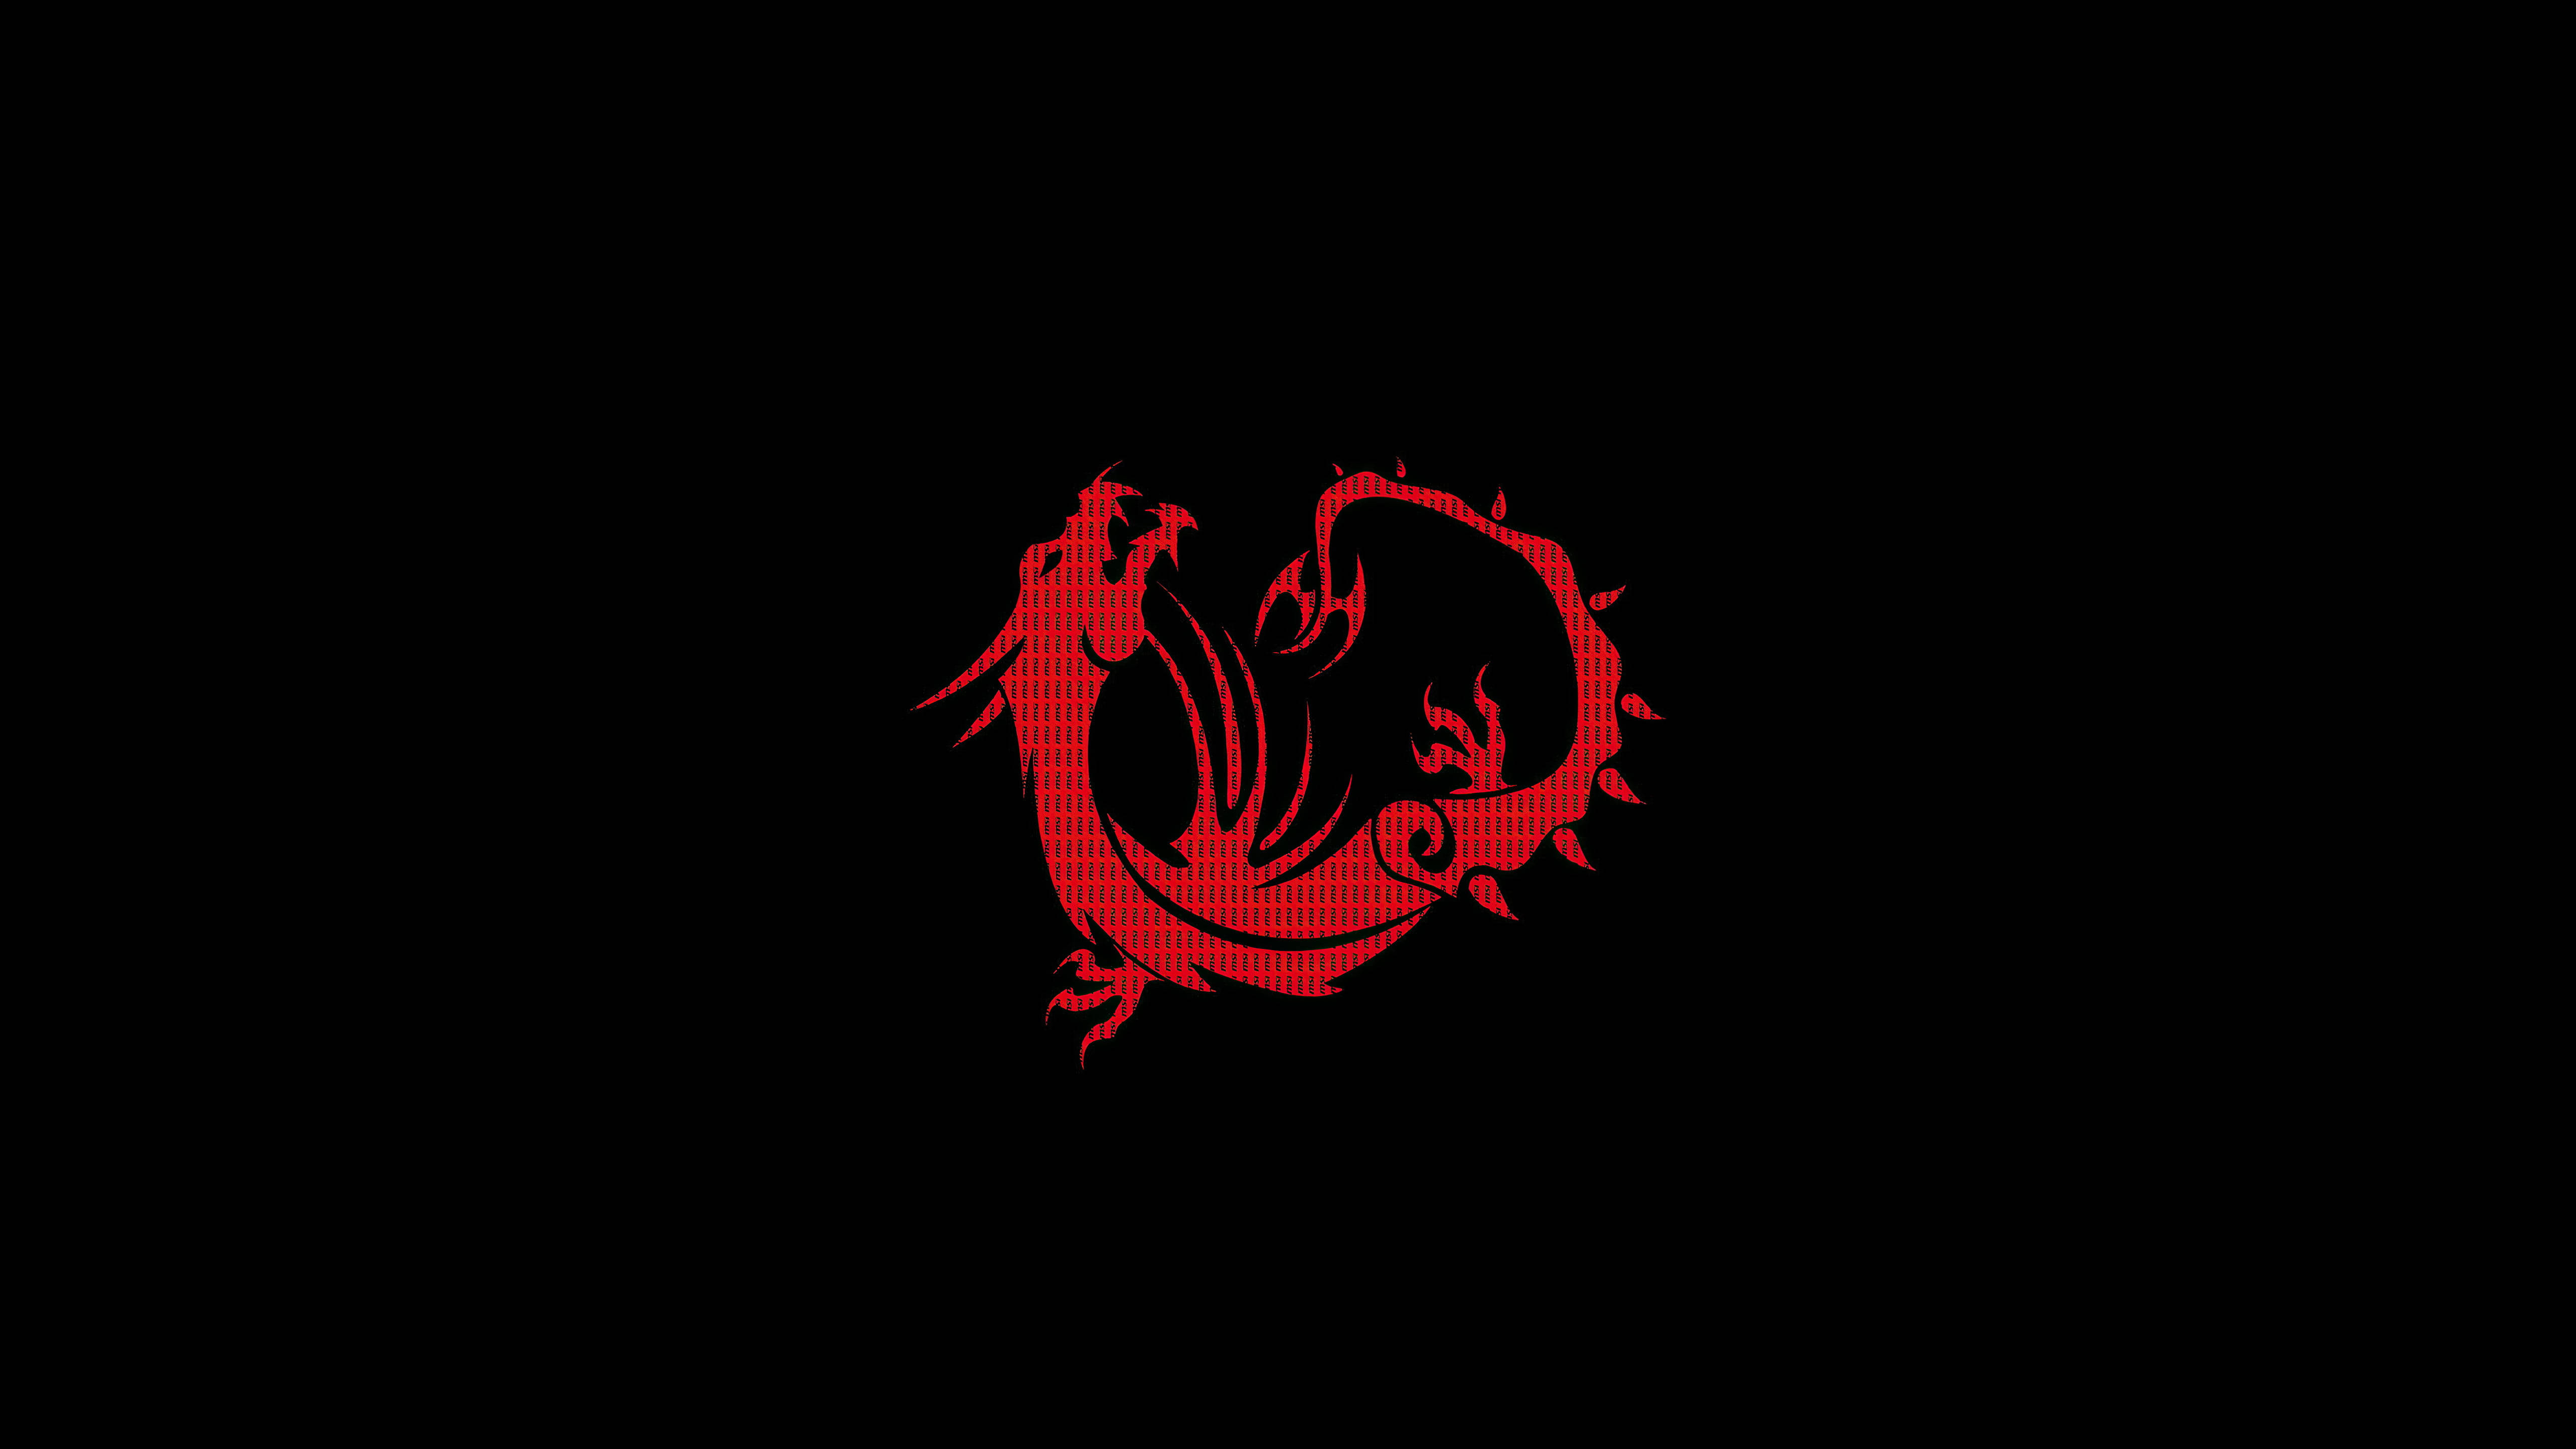 MSI Dragon Black And Red Gaming Wallpaper